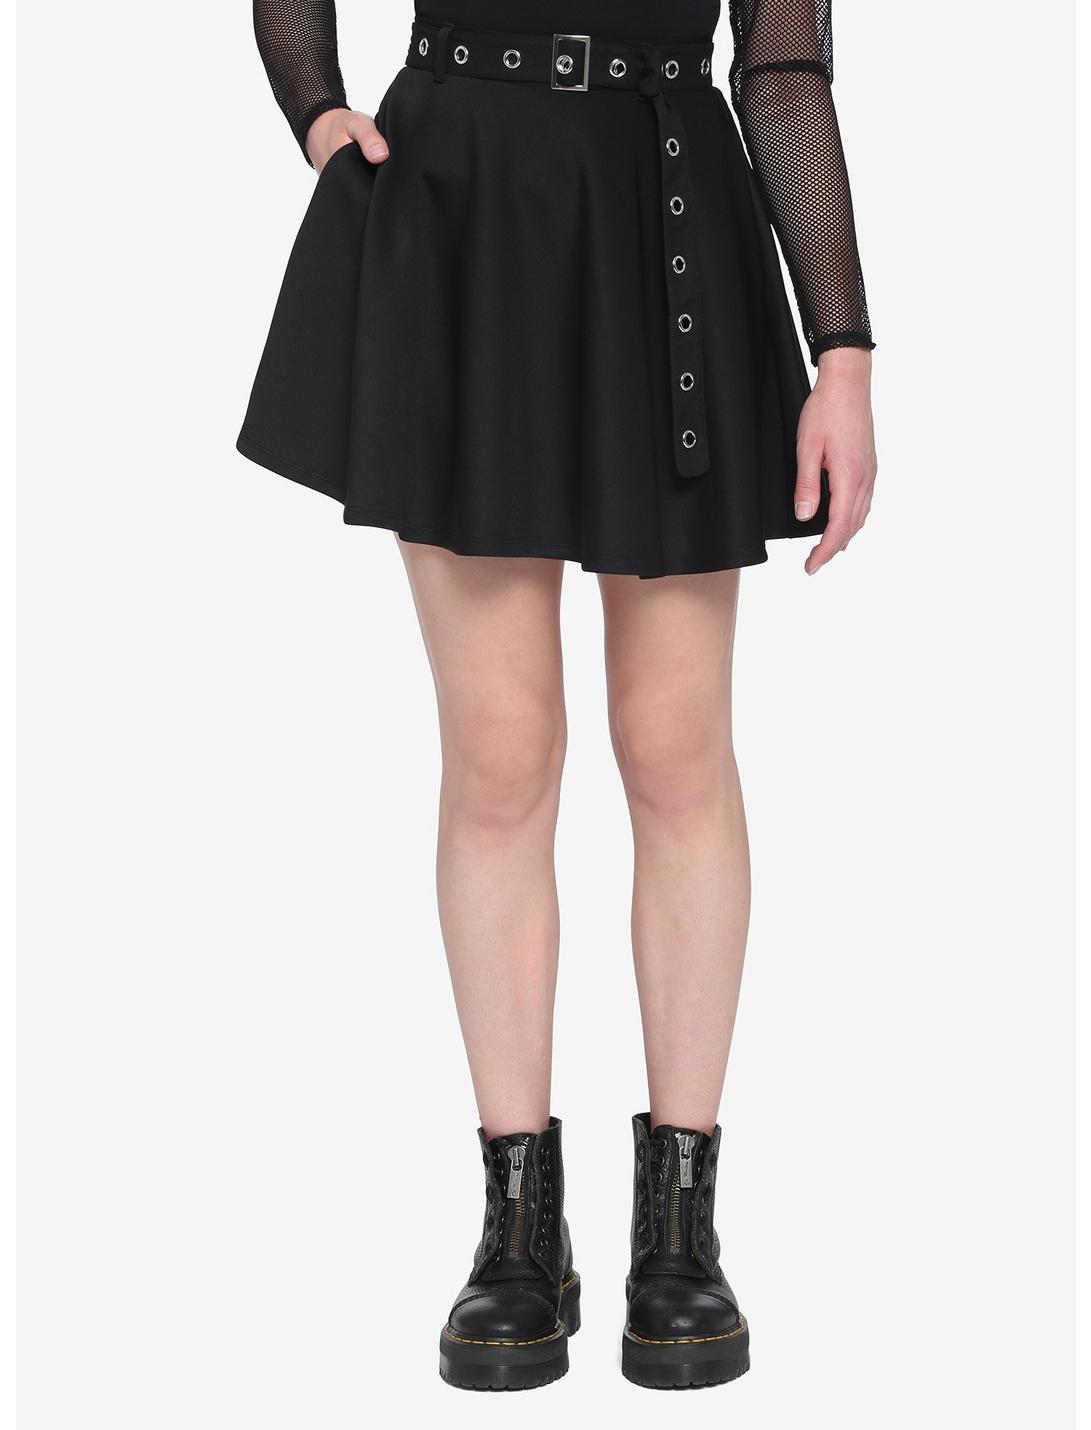 Black Skater Skirt With Grommet Belt, BLACK, hi-res